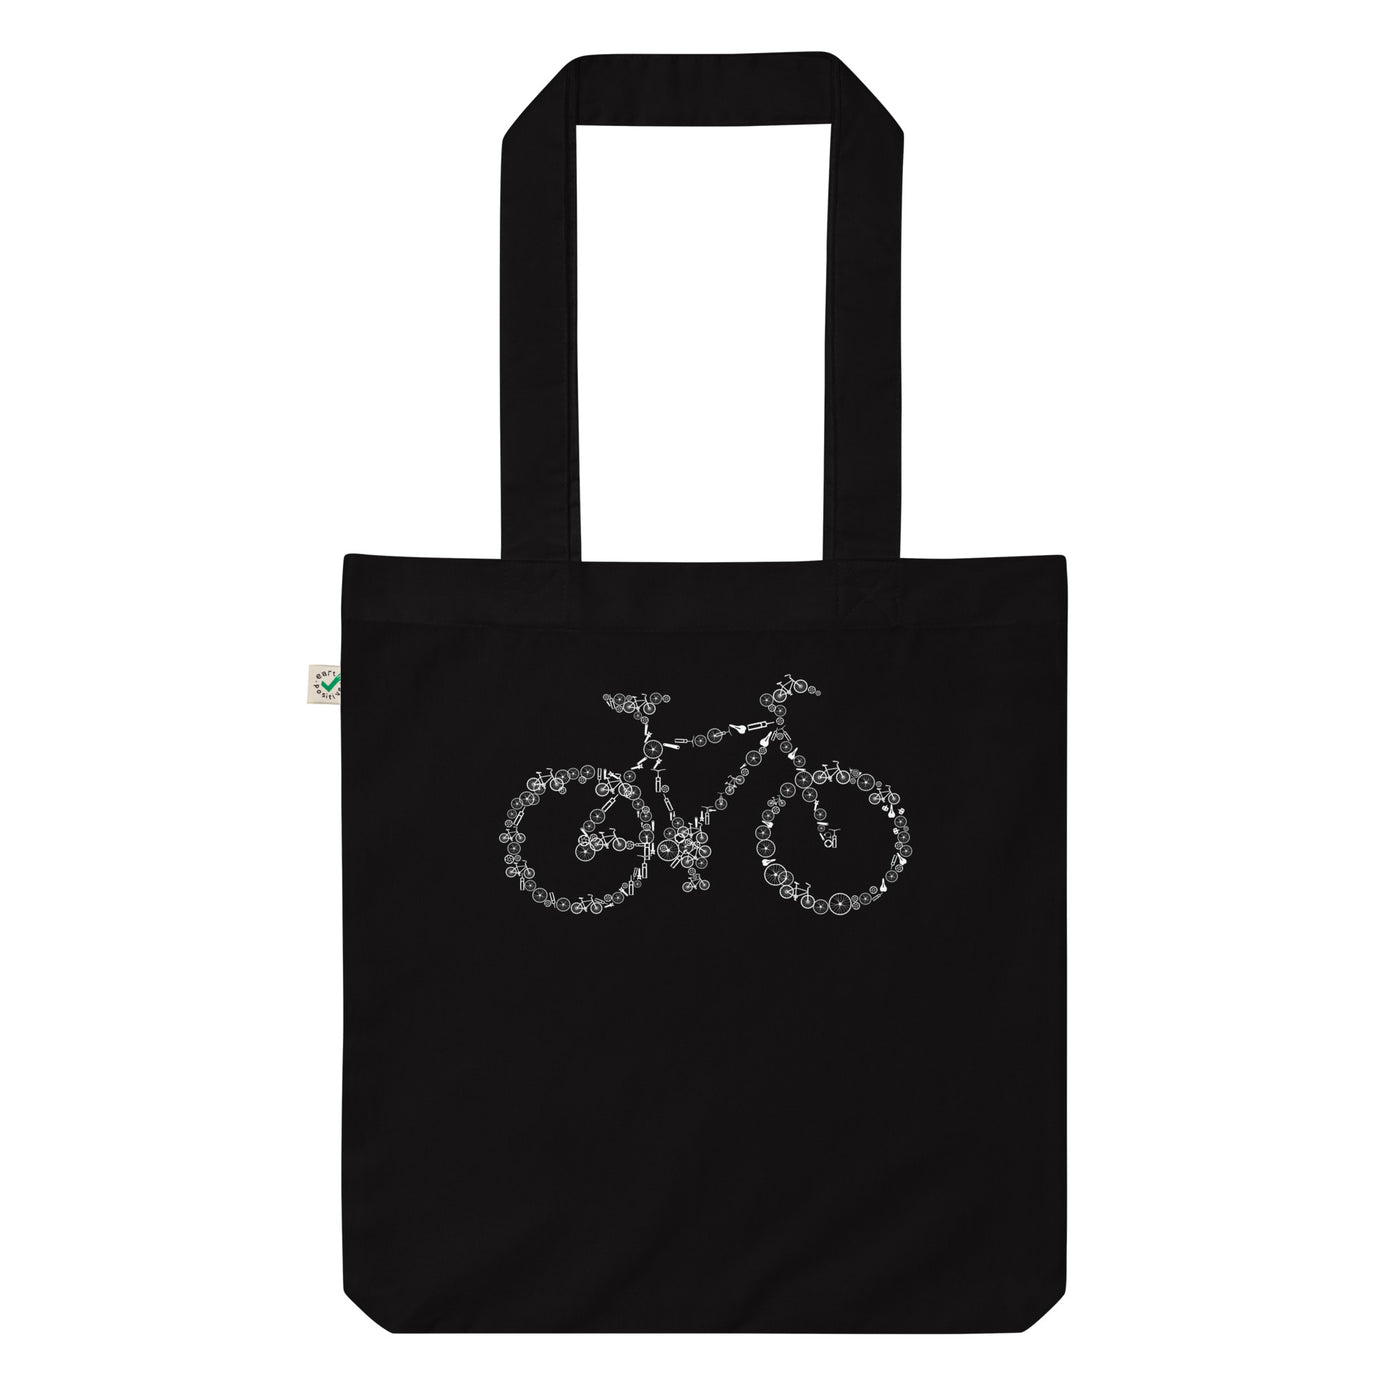 Fahrrad Kollektiv - Organic Einkaufstasche fahrrad